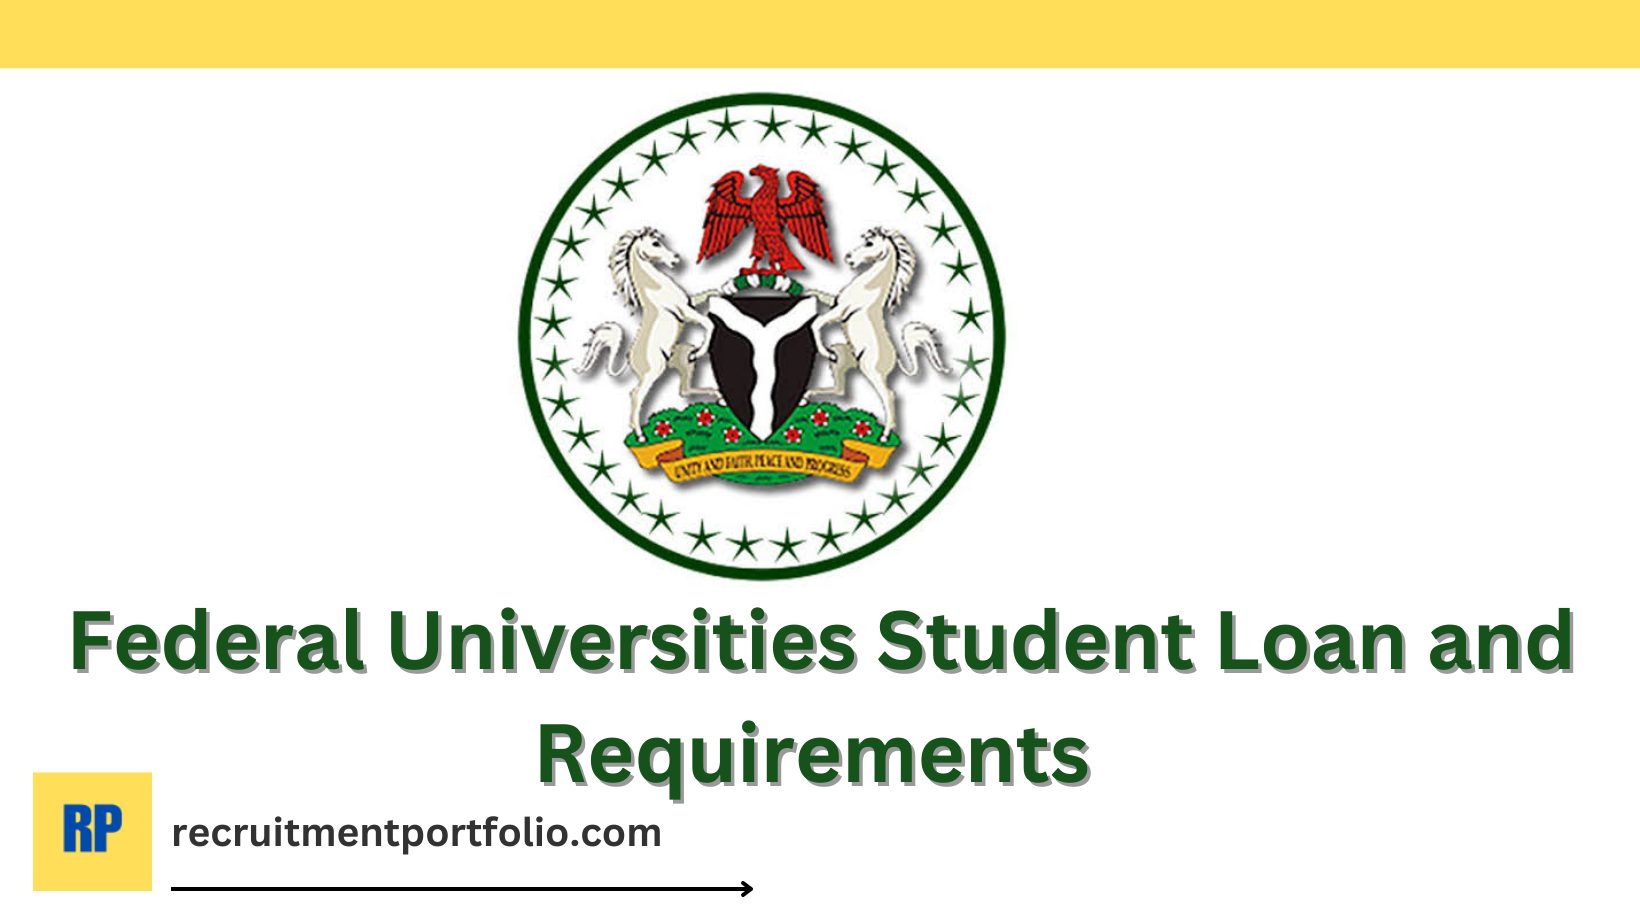 Federal Universities Student Loan